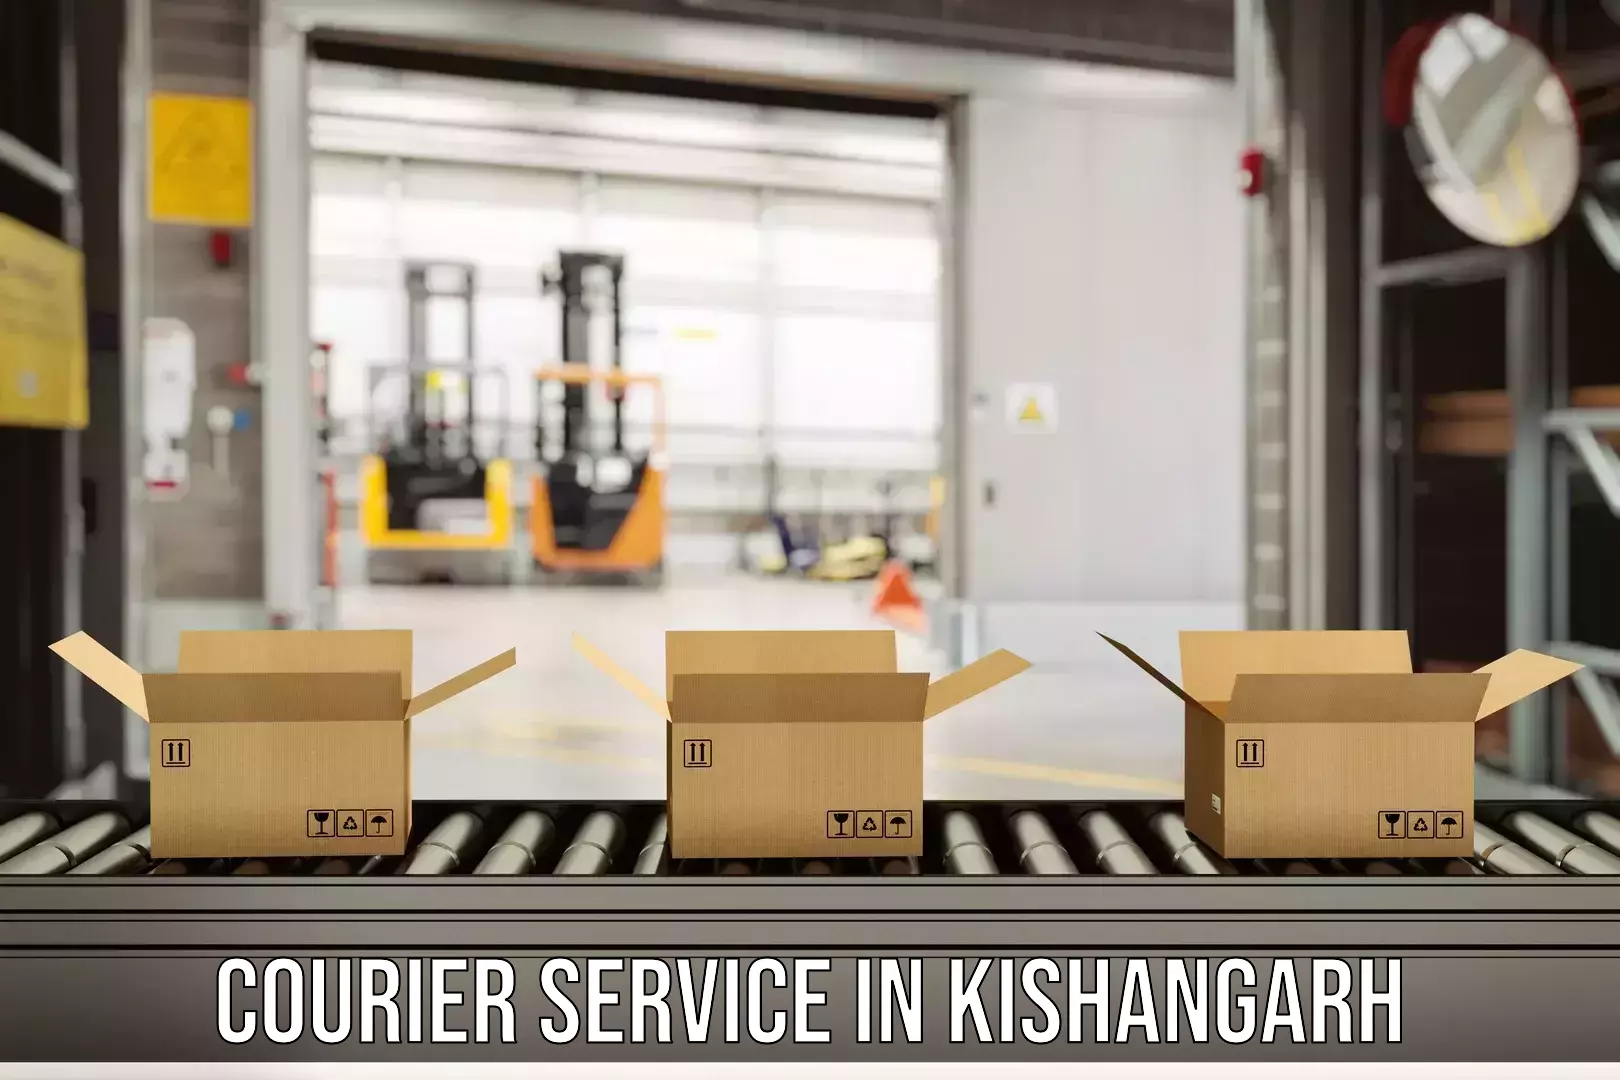 Budget-friendly shipping in Kishangarh